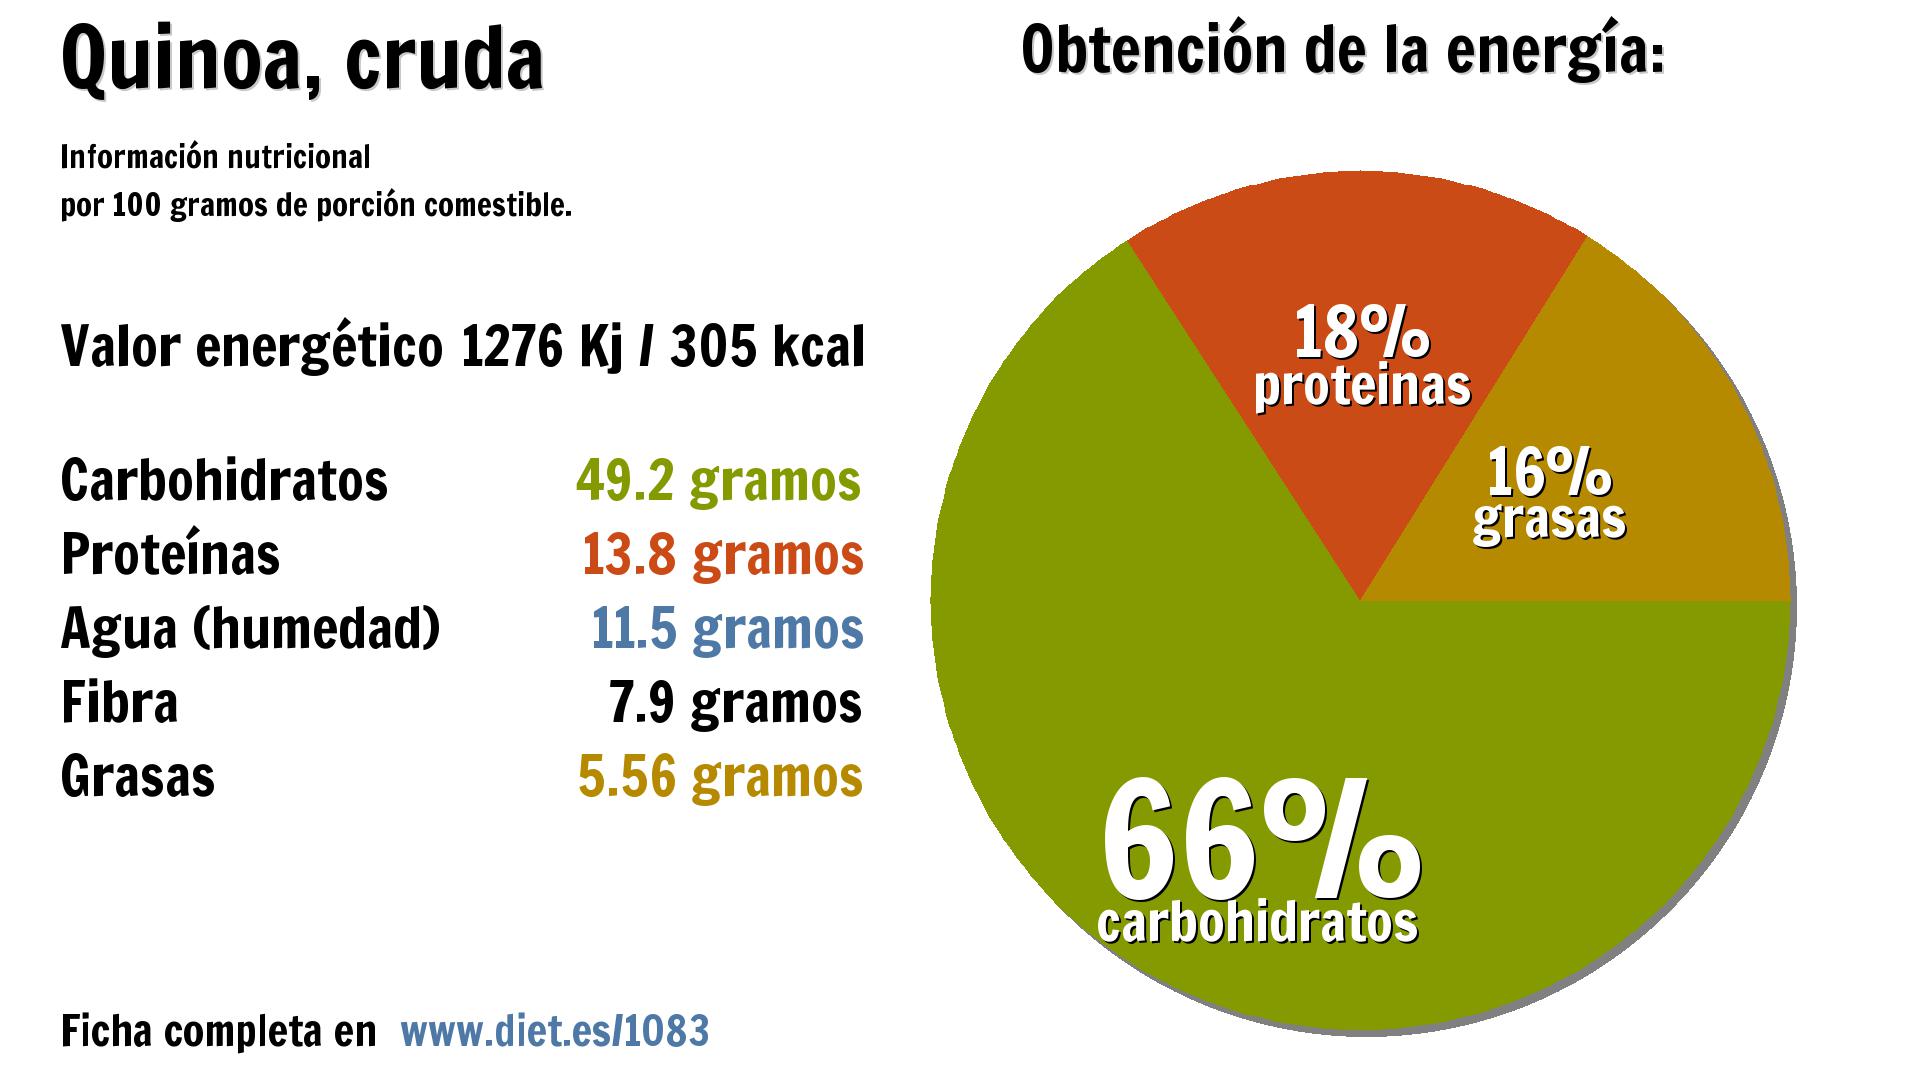 Quinoa, cruda: energía 1276 Kj, carbohidratos 49 g., proteínas 14 g., agua 12 g., fibra 8 g. y grasas 6 g.